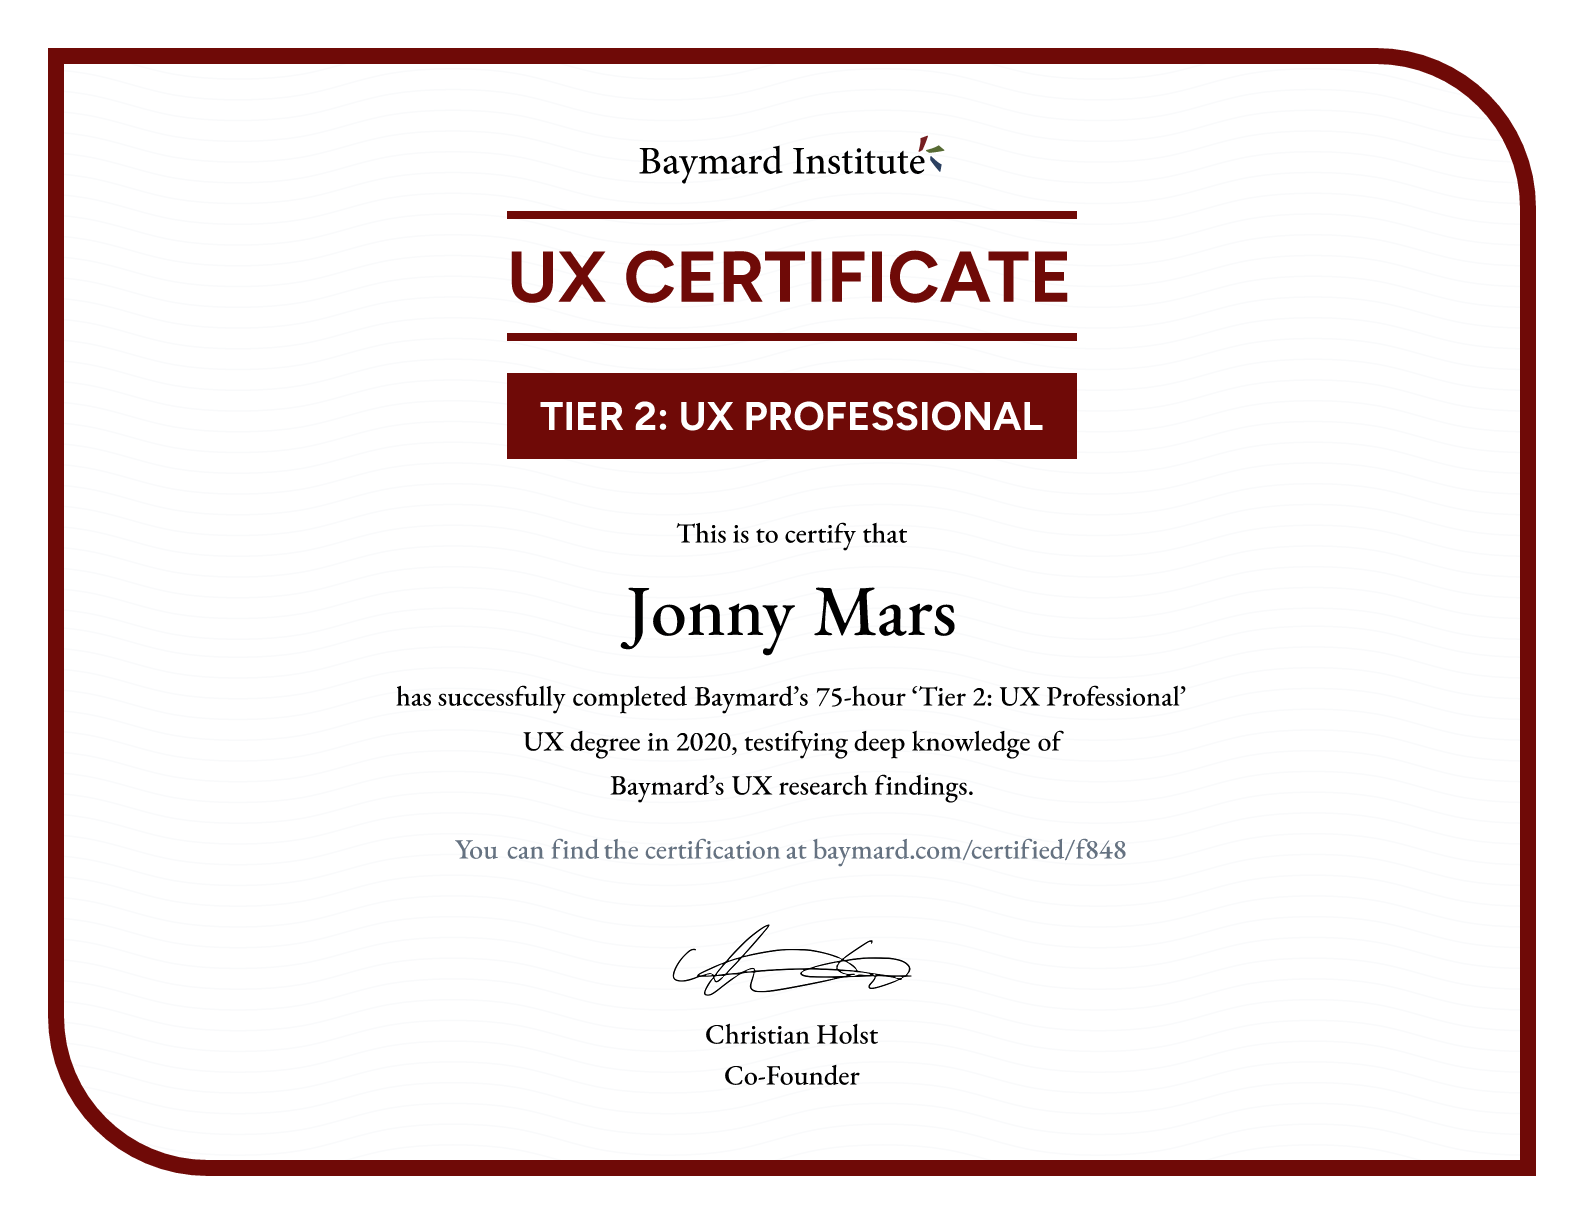 Jonny Mars’s certificate